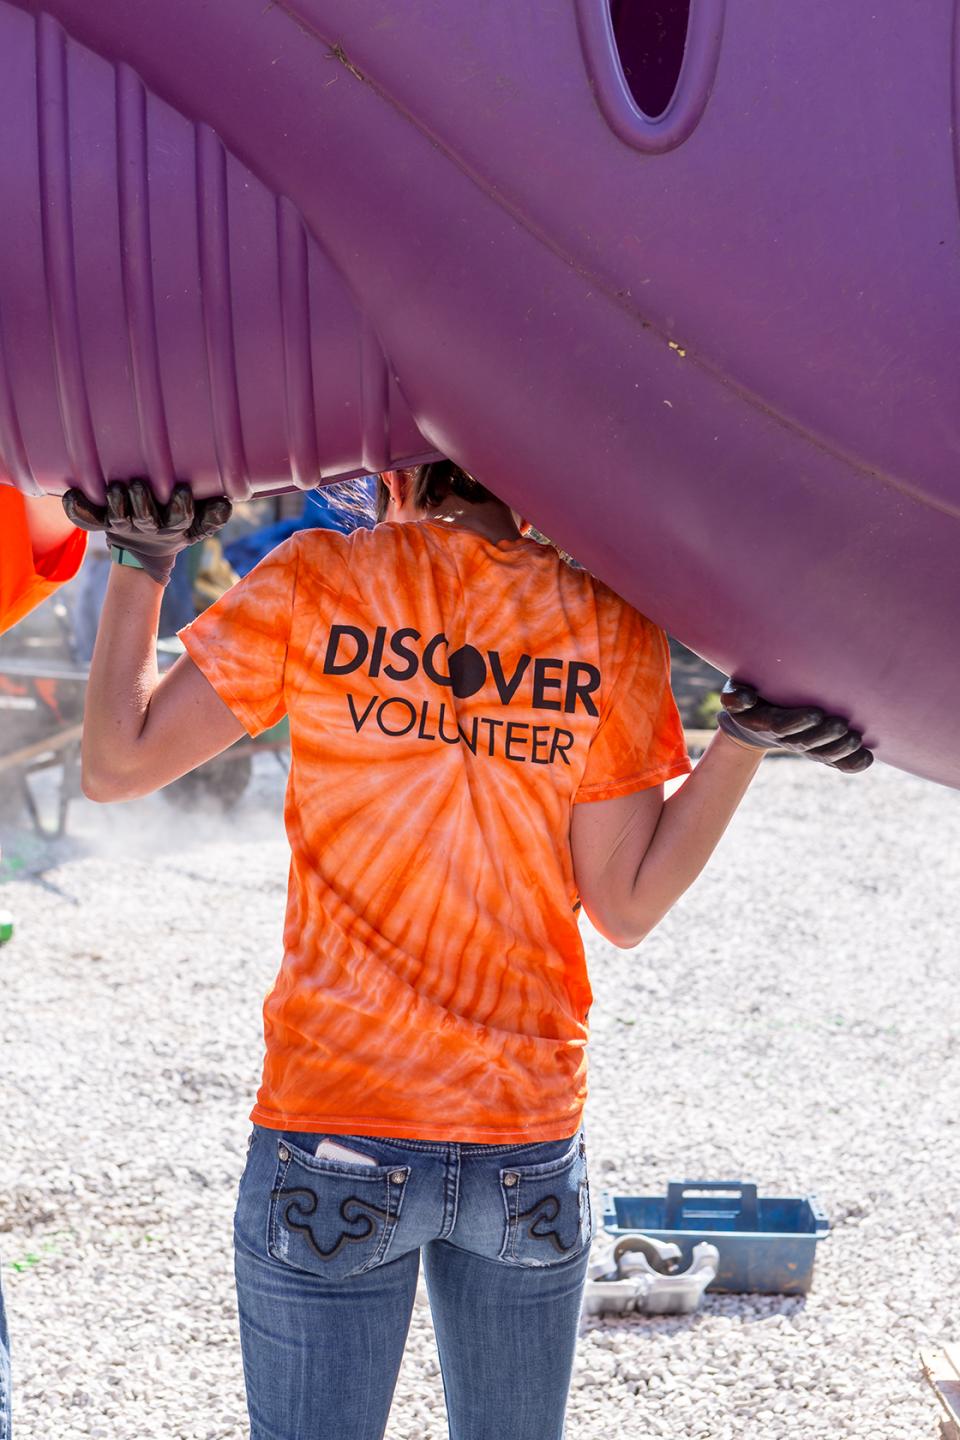 Discover Volunteerism